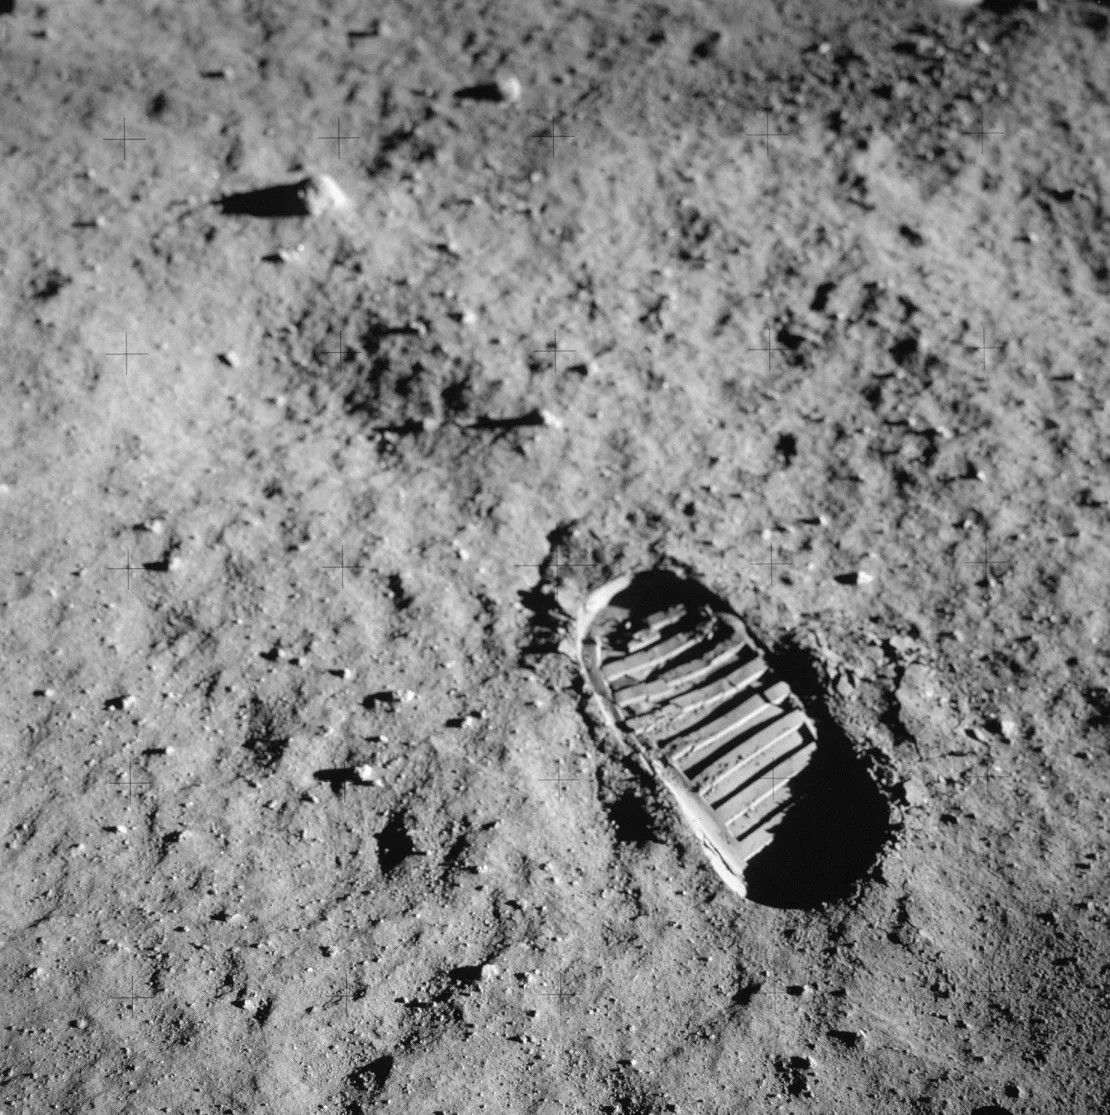 An astronaut's boot imprint on the moon's surface